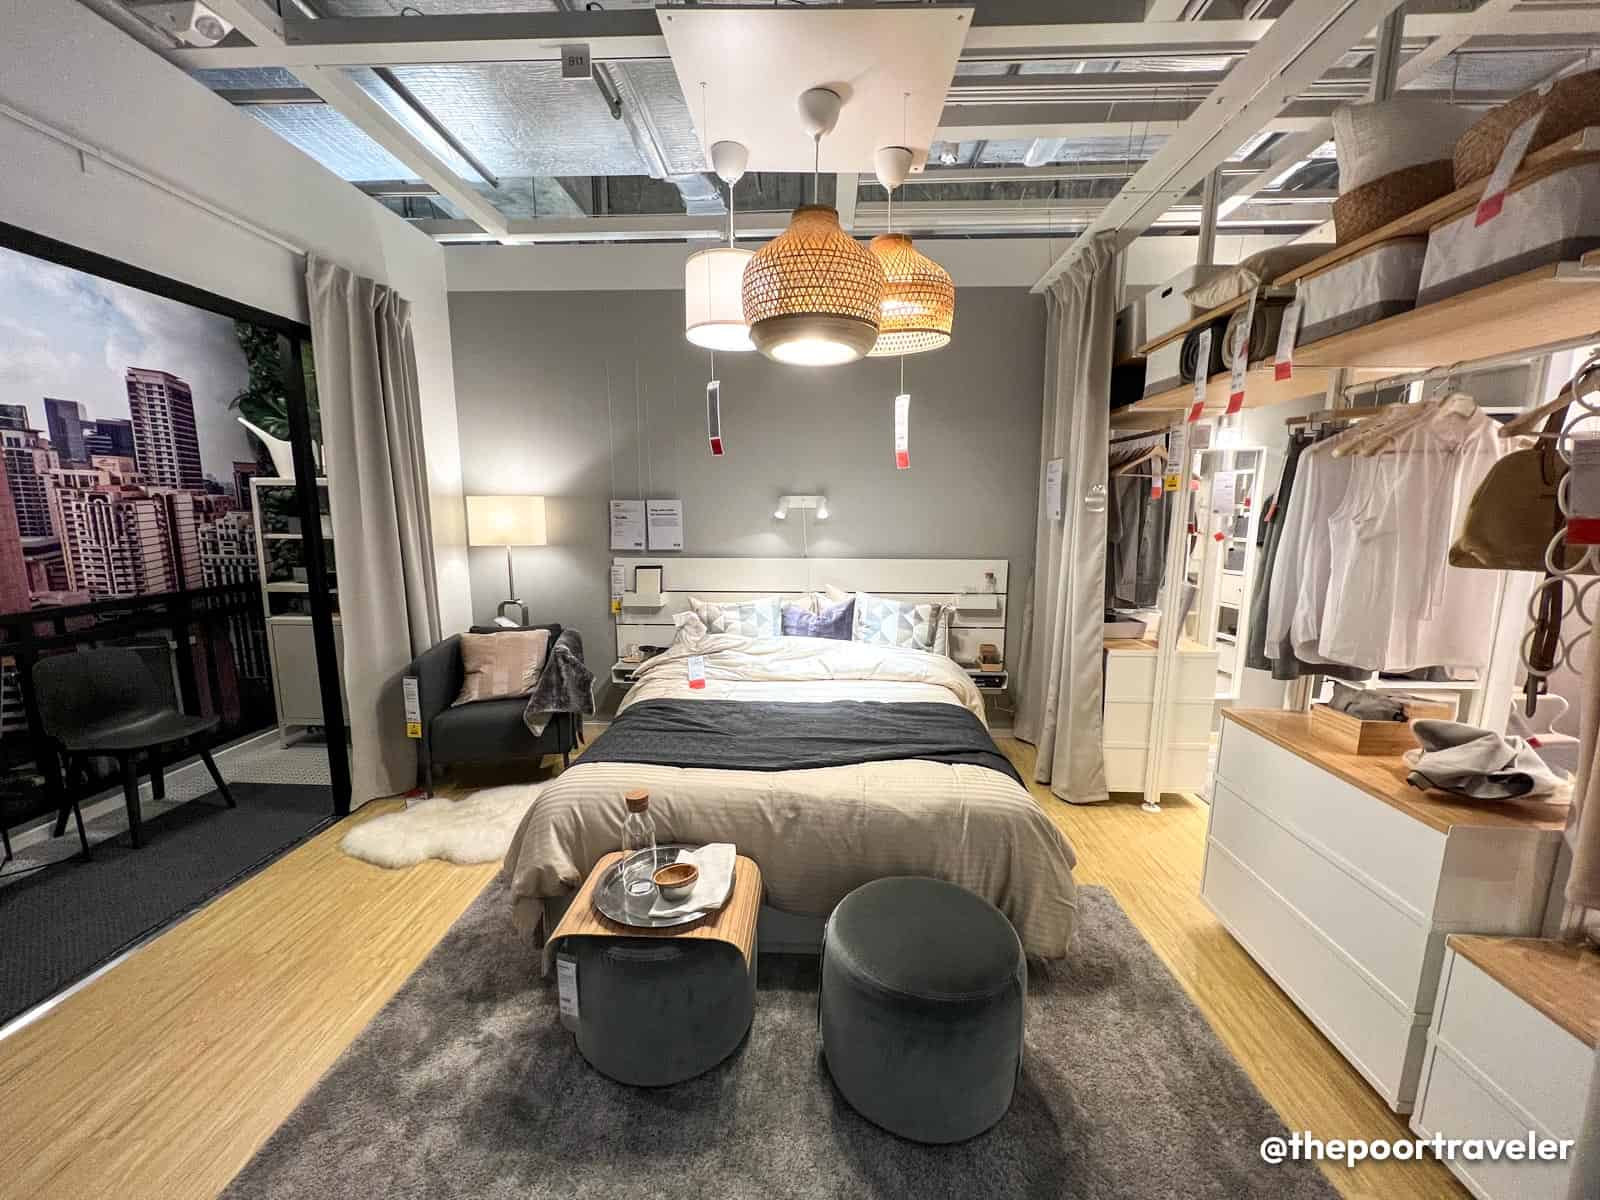 IKEA Sample Bedroom Design